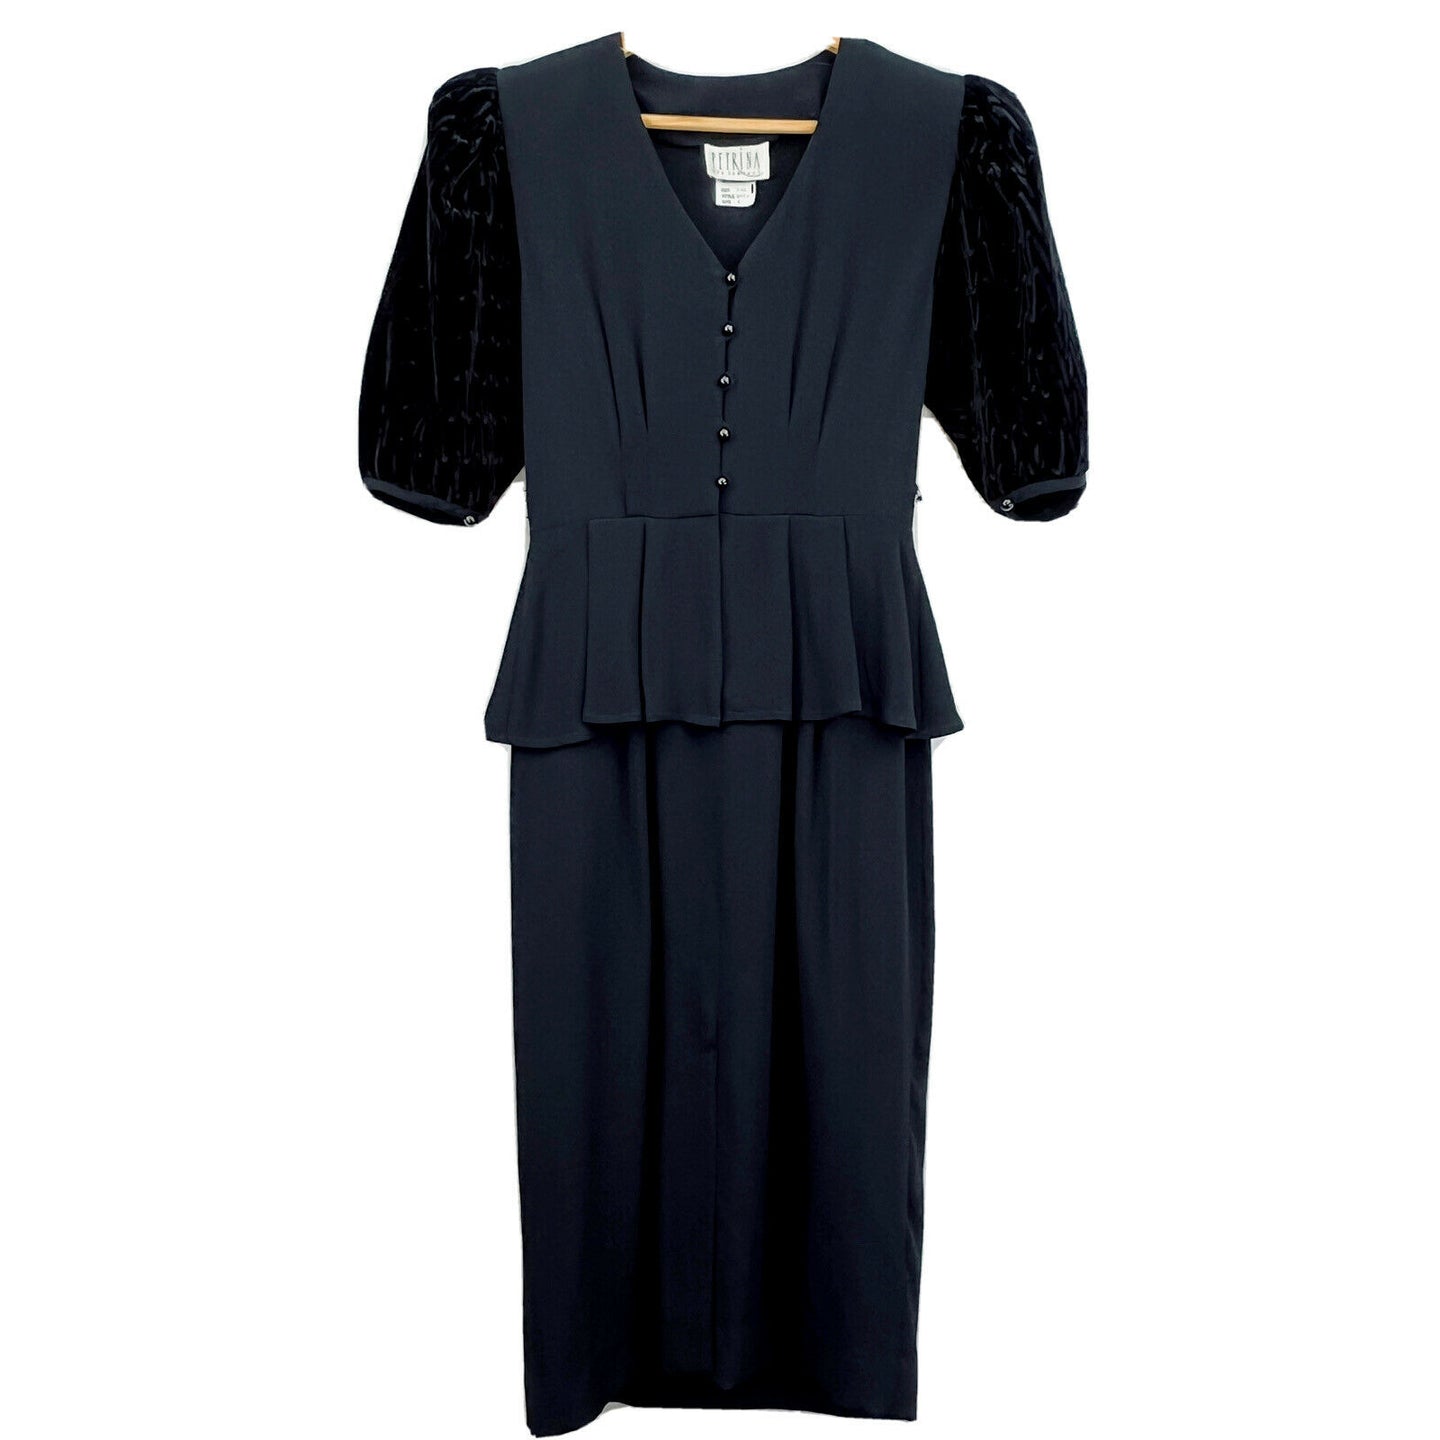 Vintage 80s Dress Peplum & Puff Sleeves Black Size 4